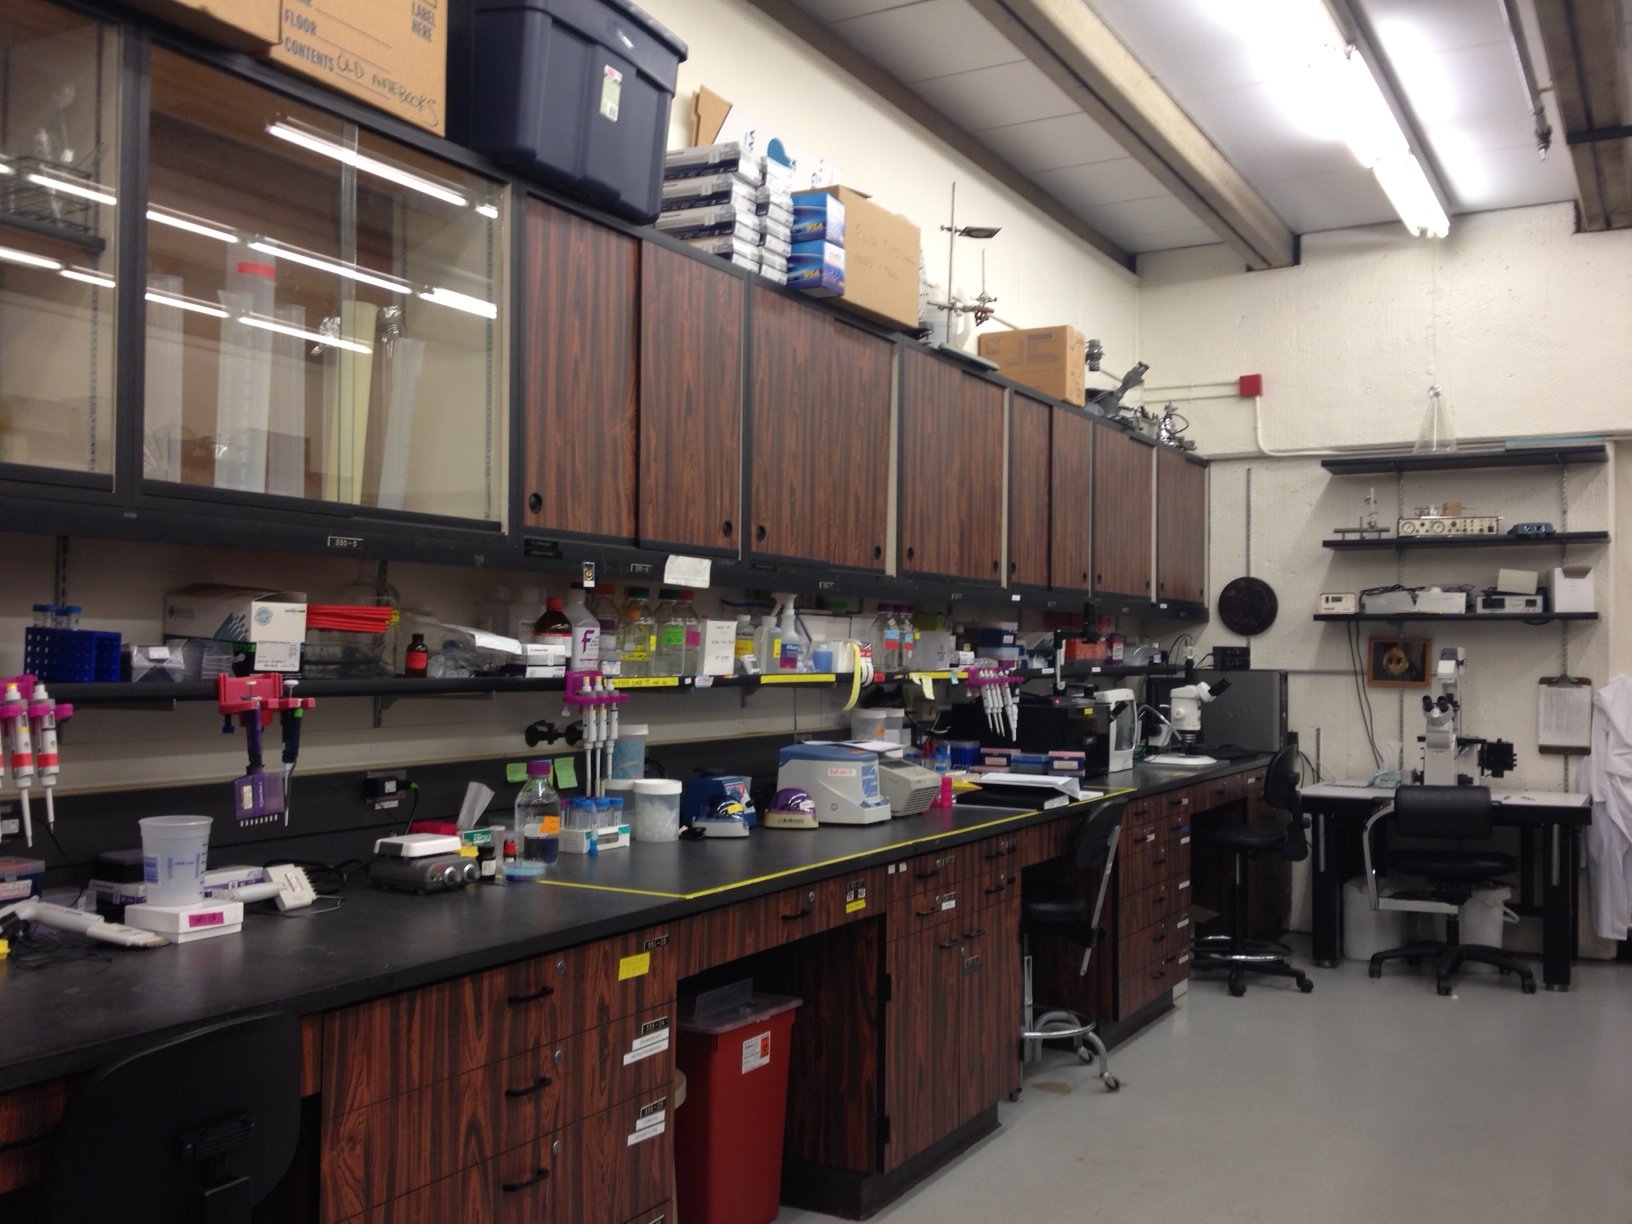 Main research laboratory